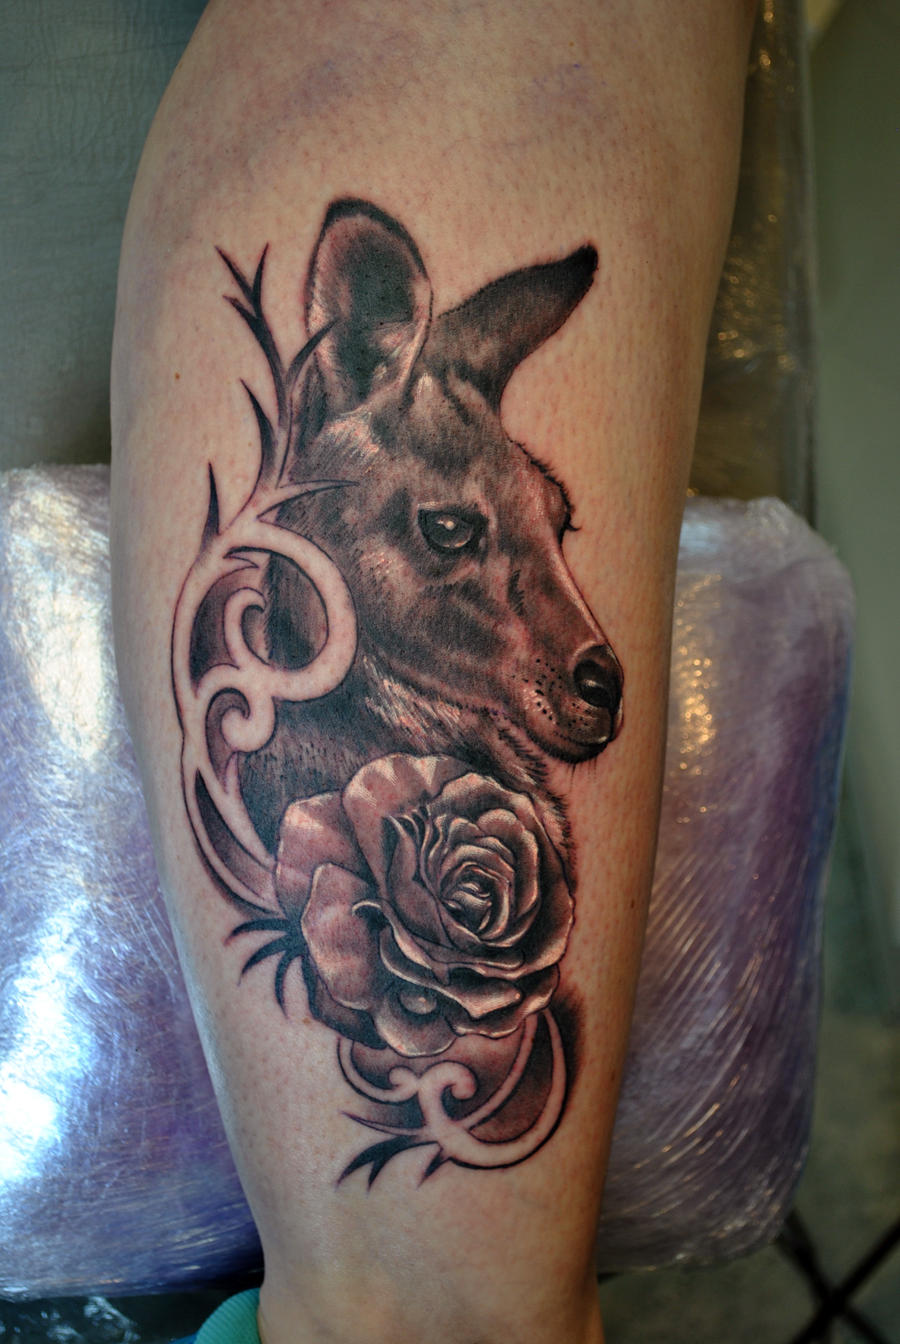 Kangaroo tattoo by gettattoo on DeviantArt